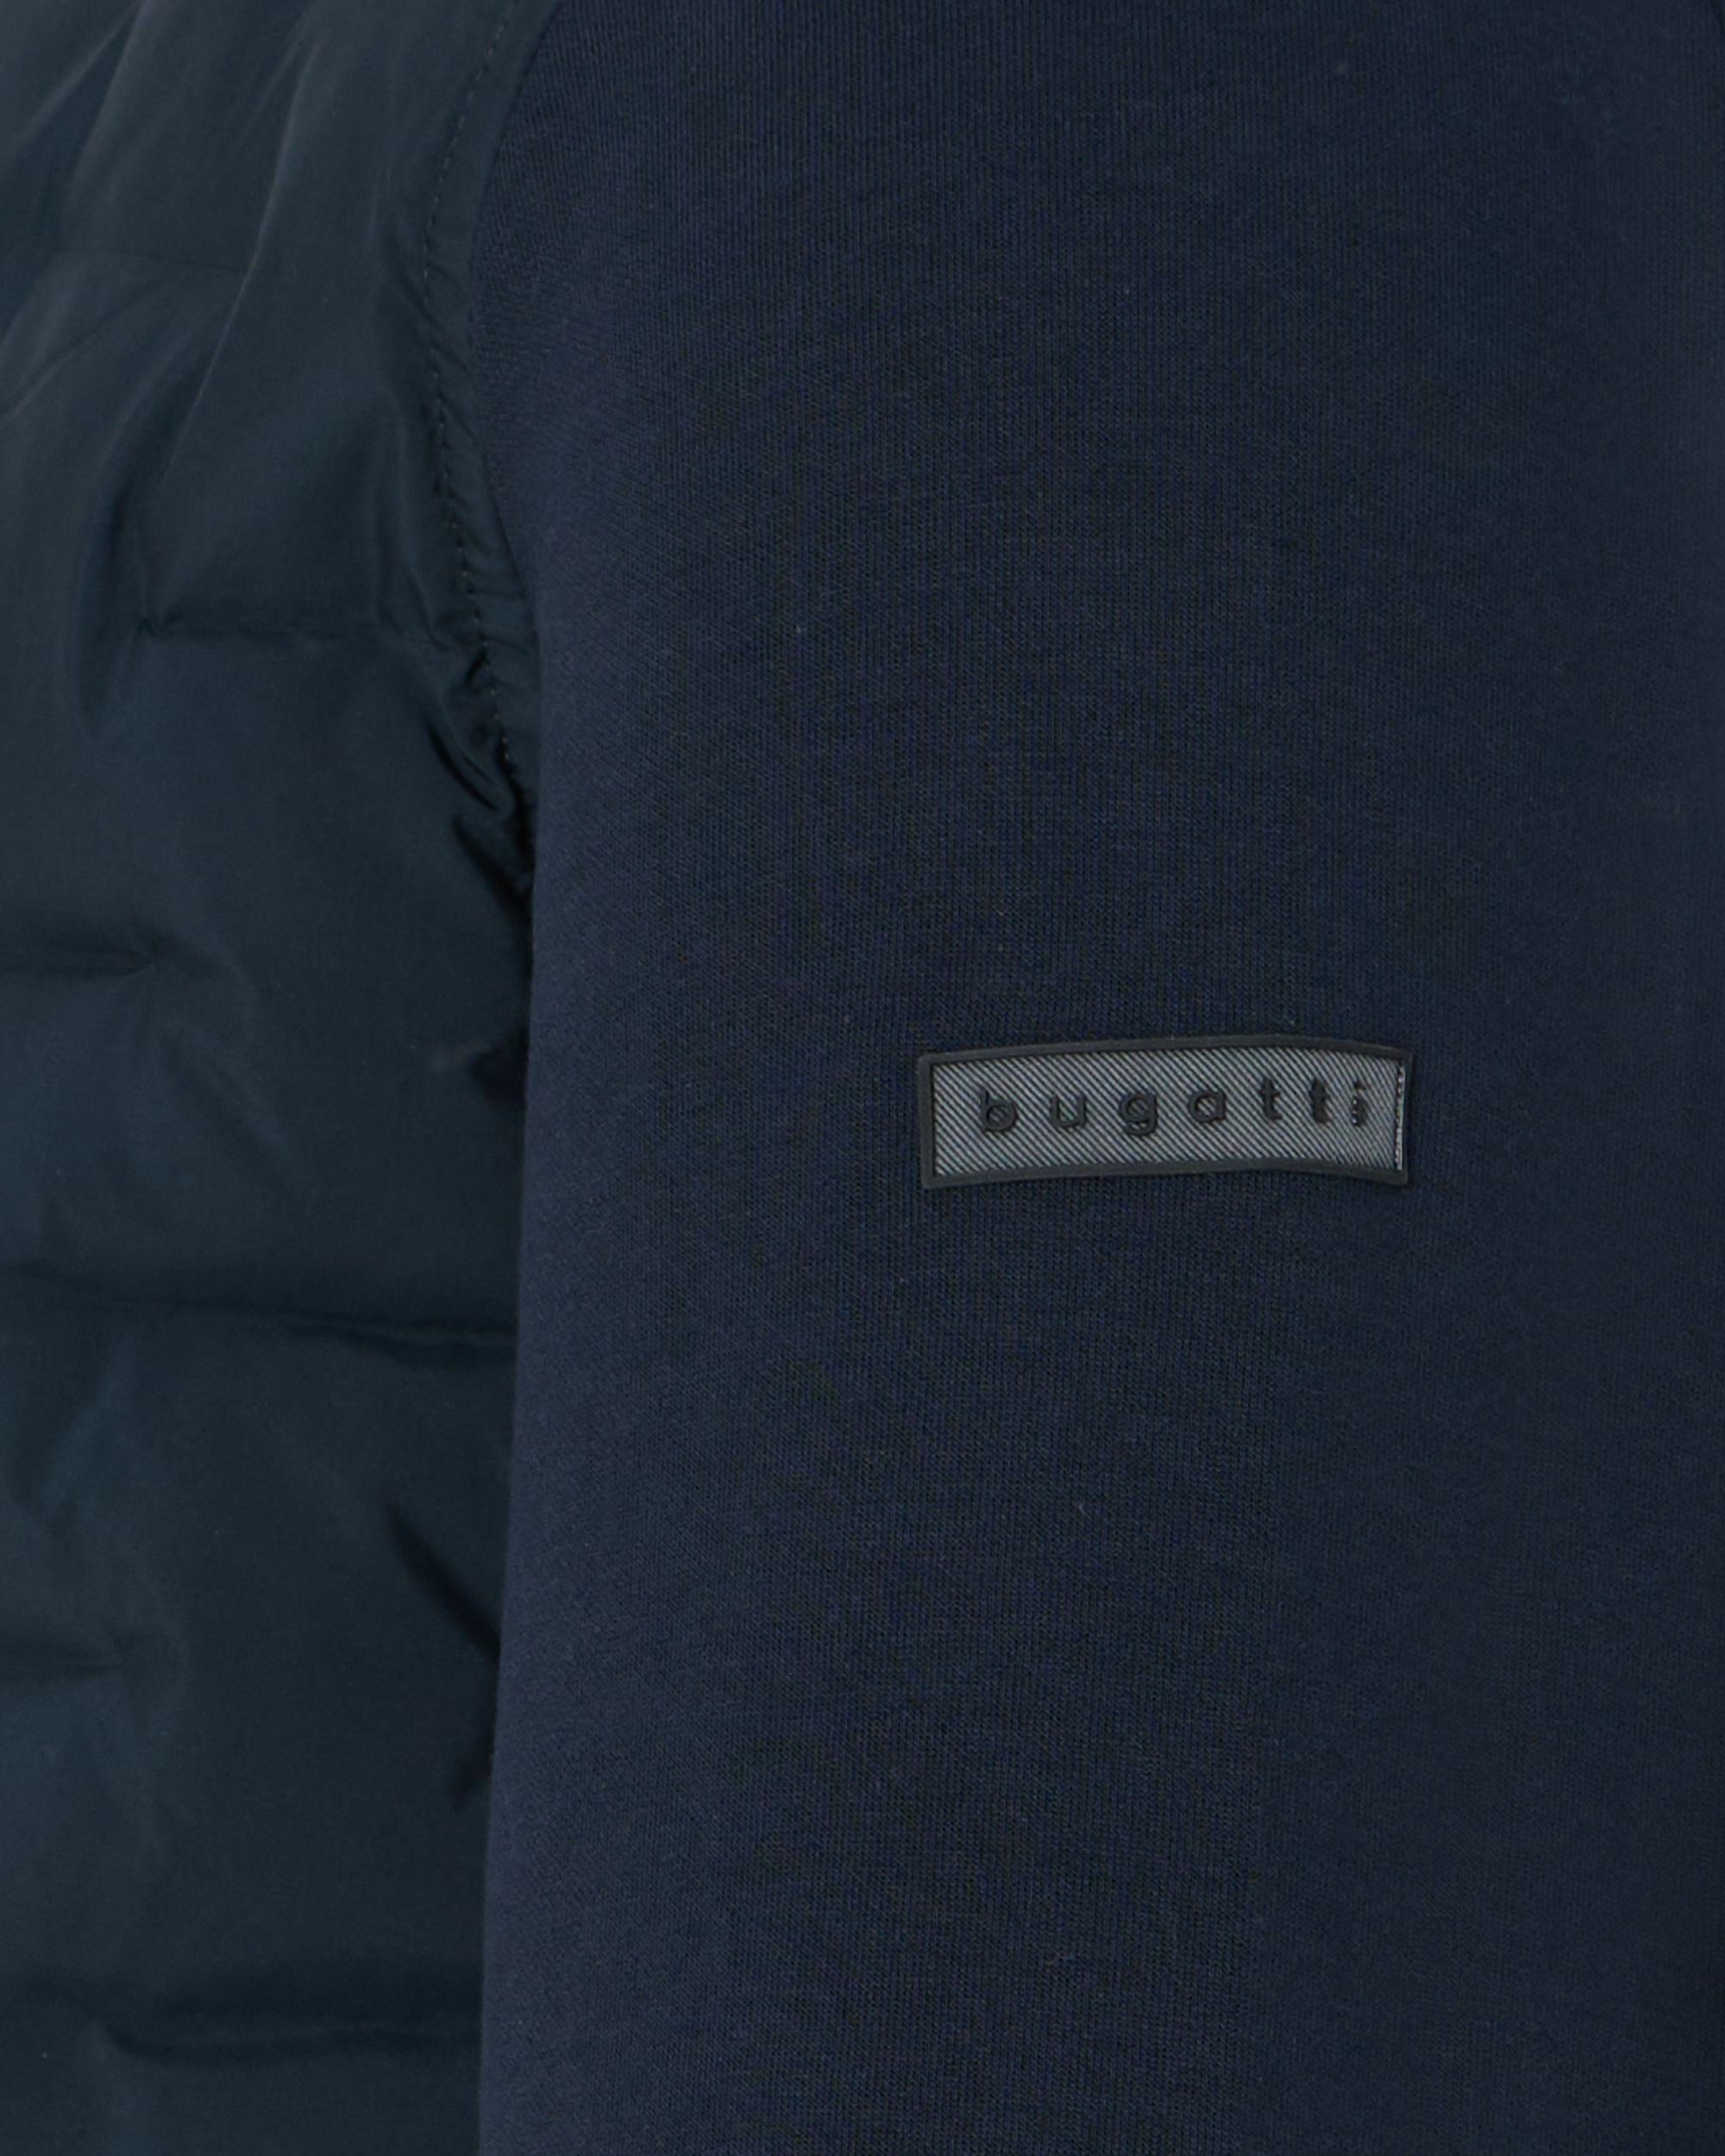 Bugatti clothing Vest Donker blauw 094537-001-L